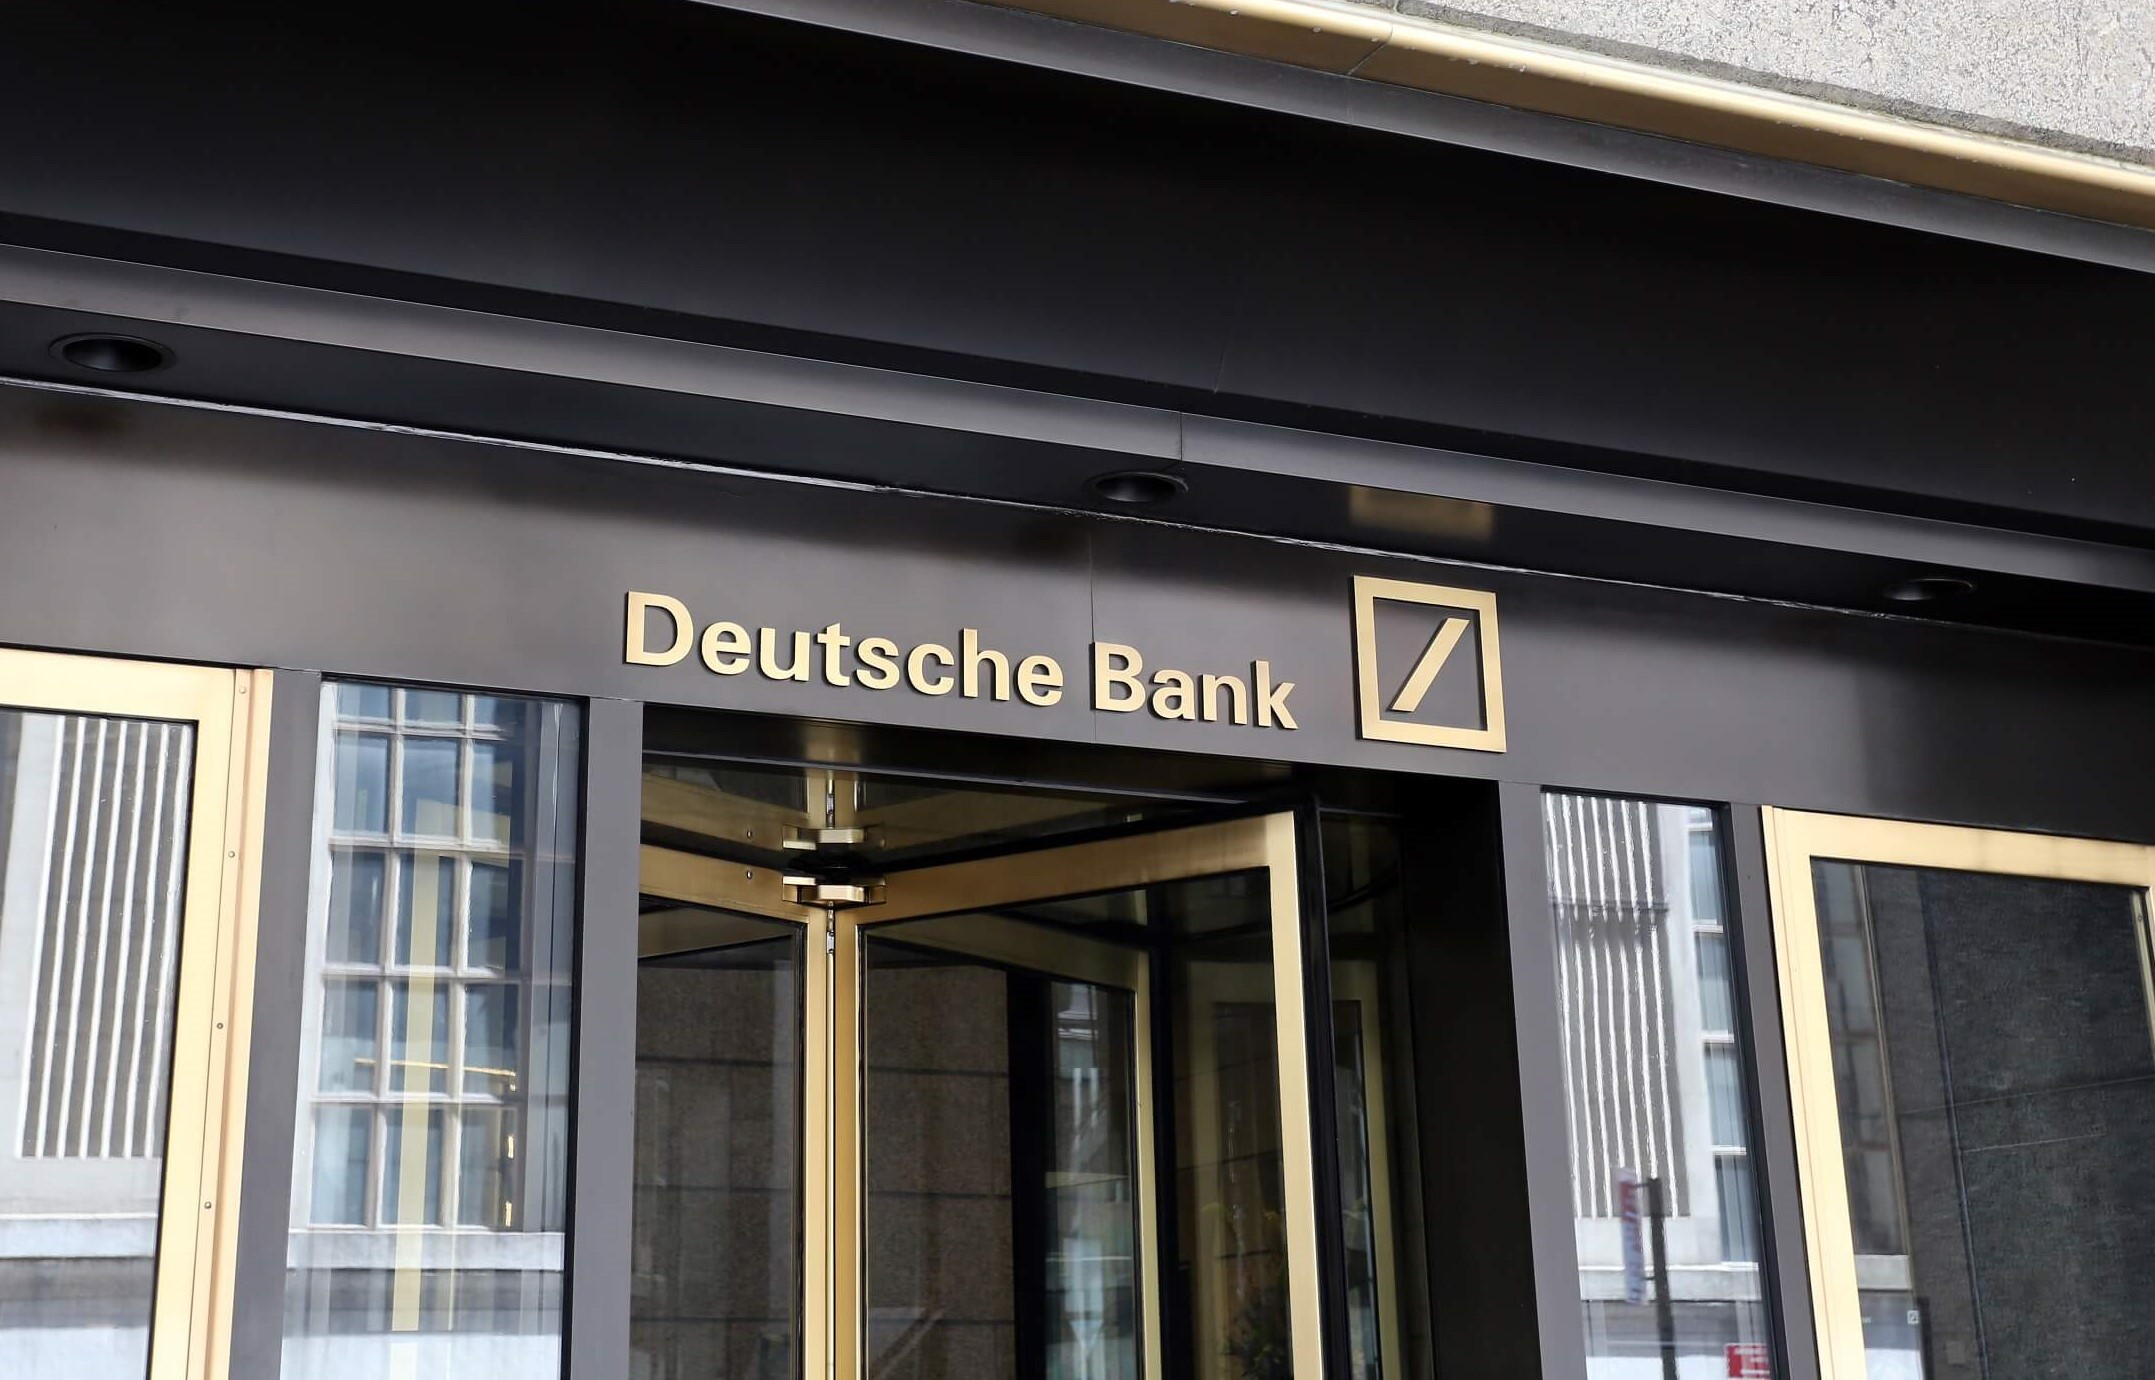 Deutsche Bank Partners Taurus to Offer Crypto Custody Services